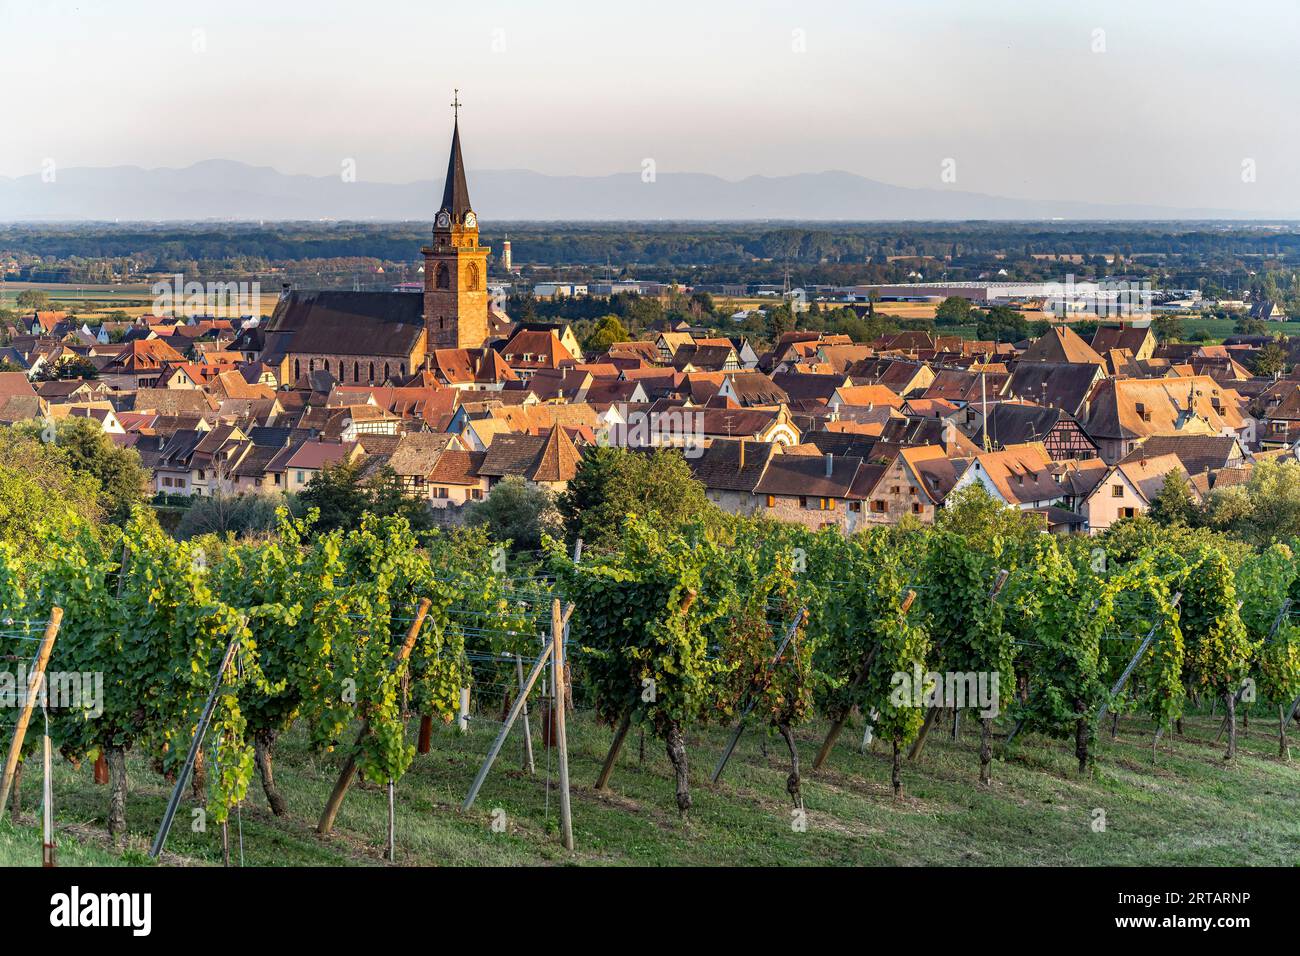 Weinberg vor der Stadtansicht Bergheim, Elsass, Frankreich  |  vineyard and cityscape Bergheim, Alsace, France Stock Photo